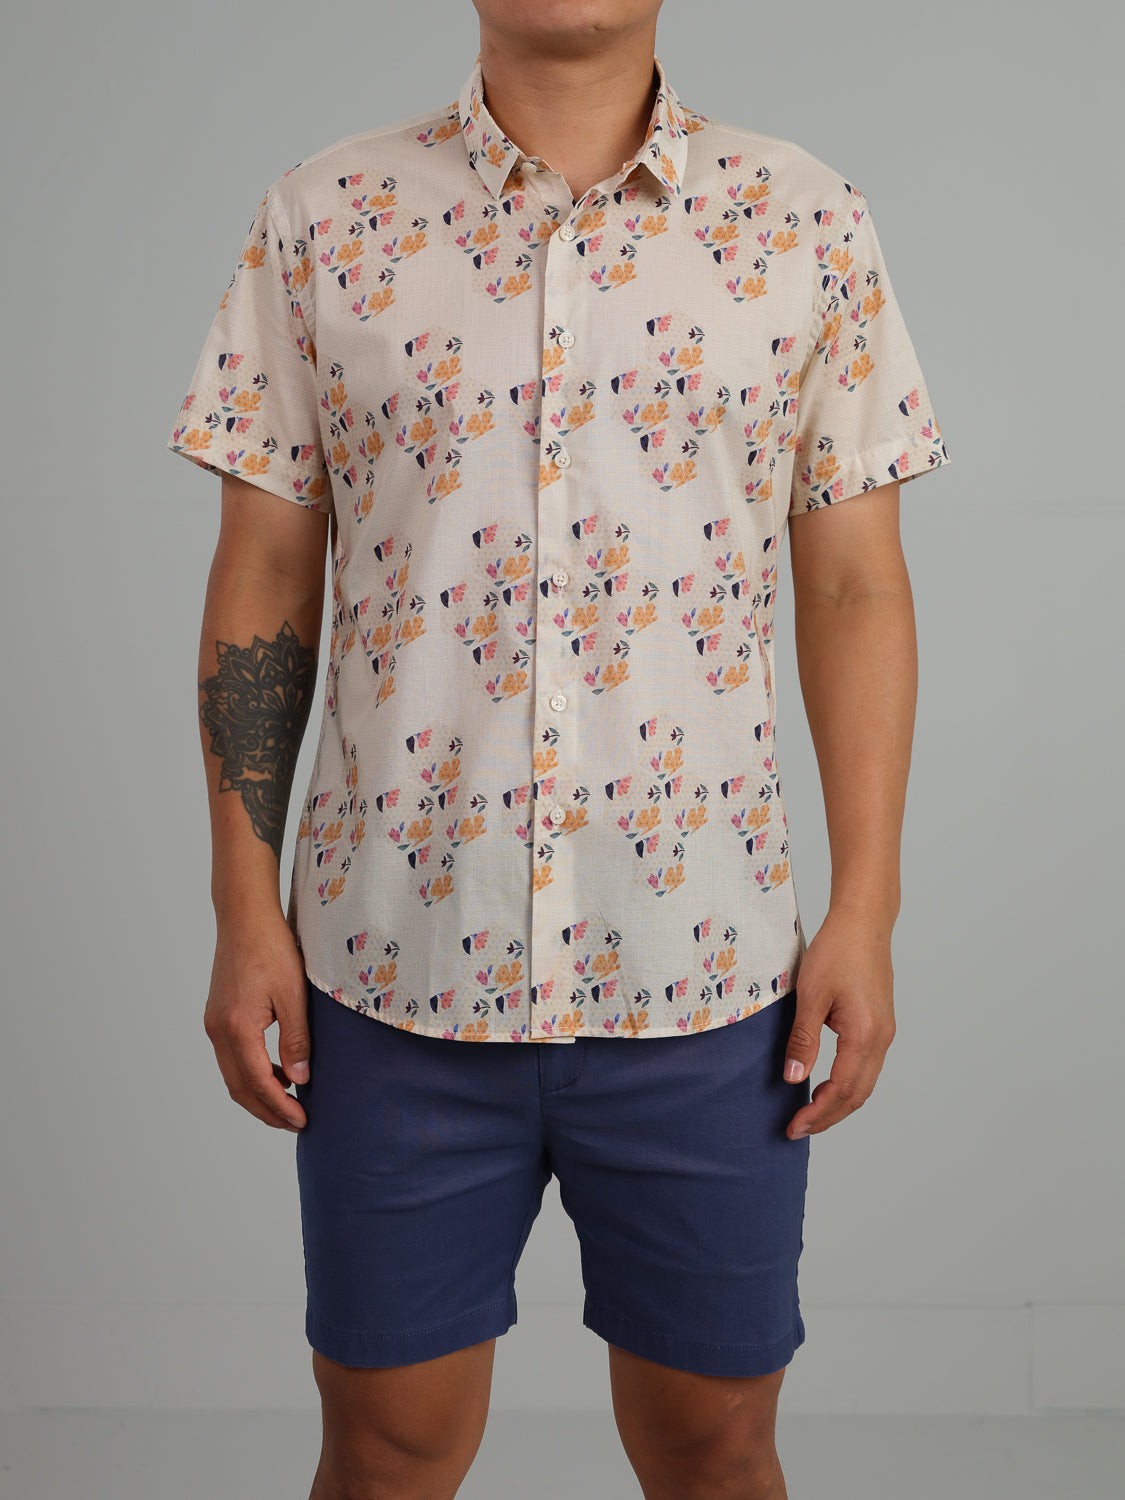 Osaka - Short sleeve 100% printed cotton shirt